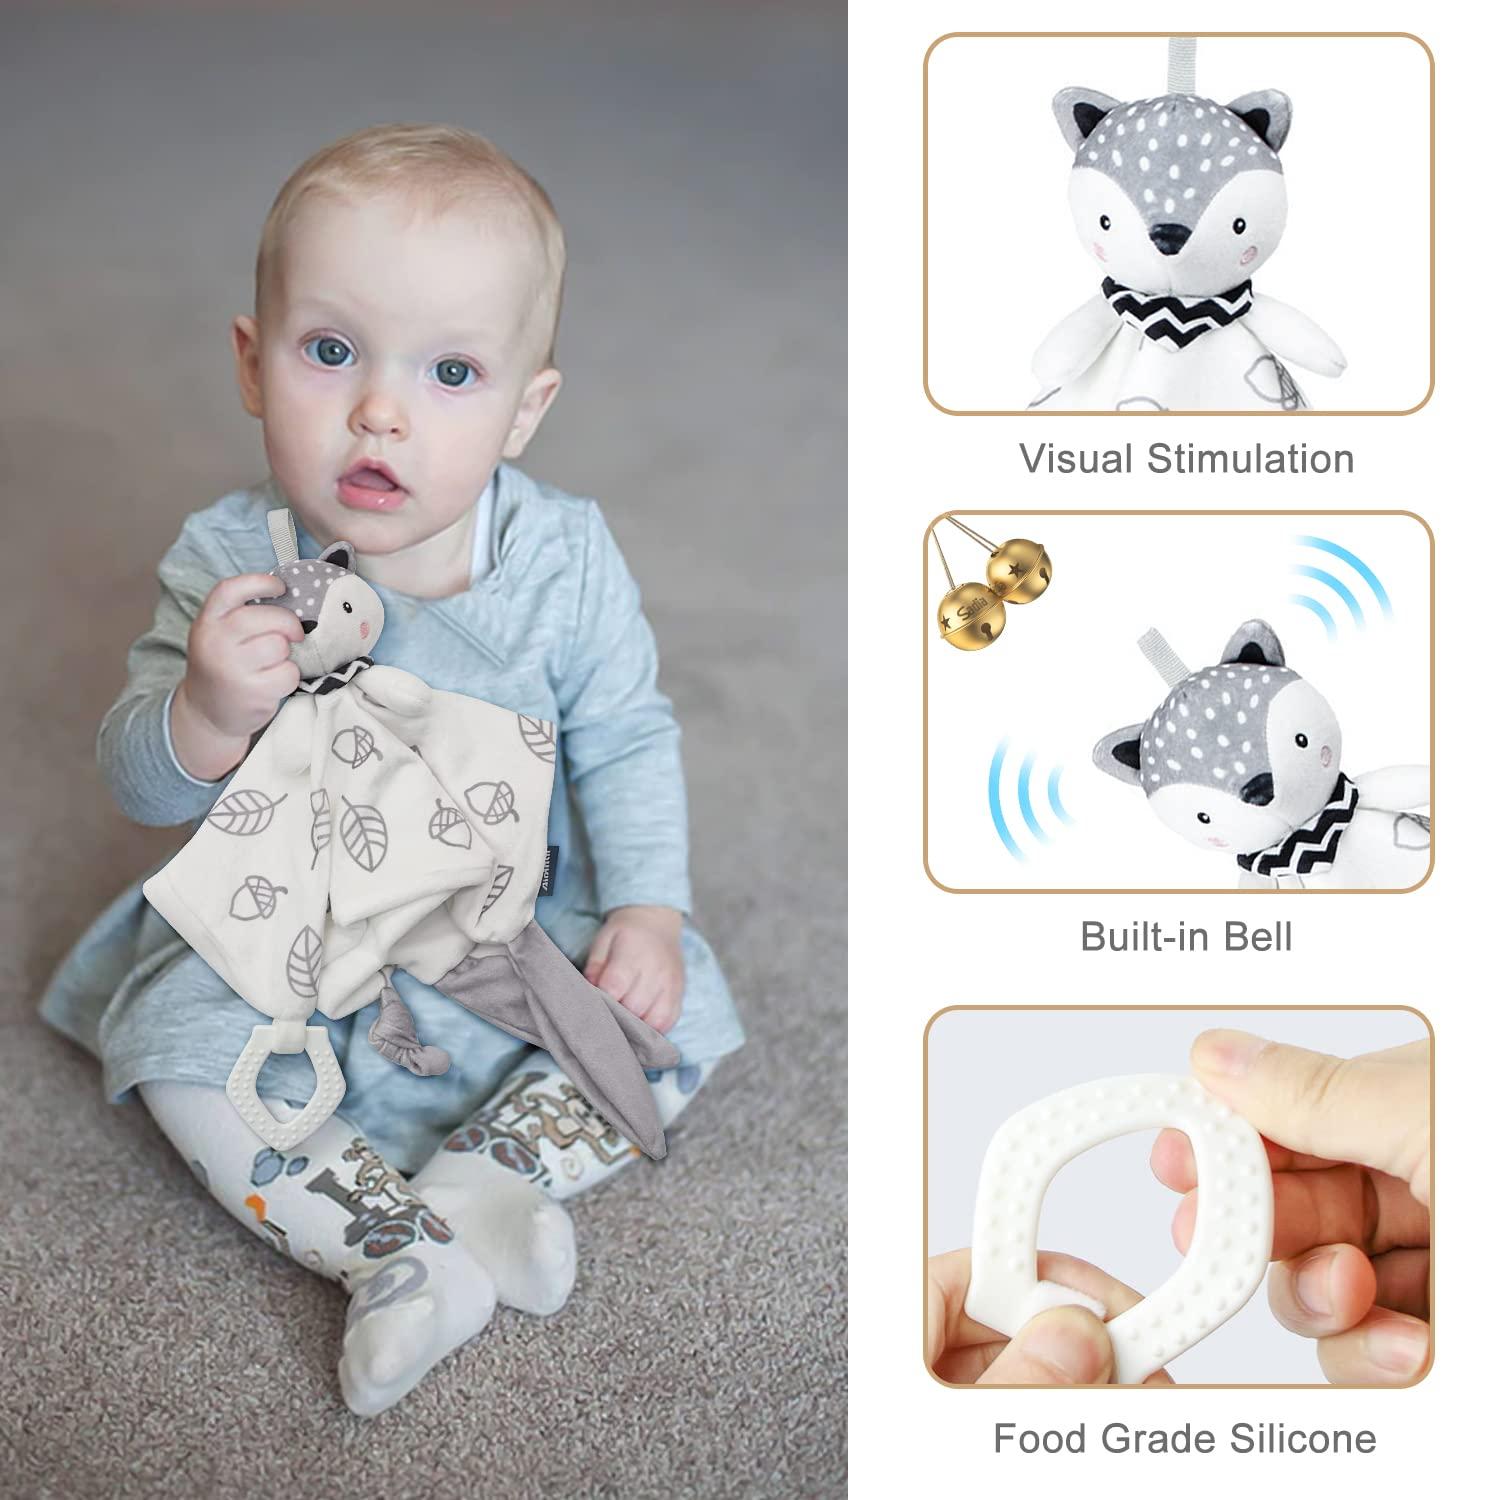 Fvntuey Baby Shower Gifts, Baby Boy Gifts Basket Includes Newborn